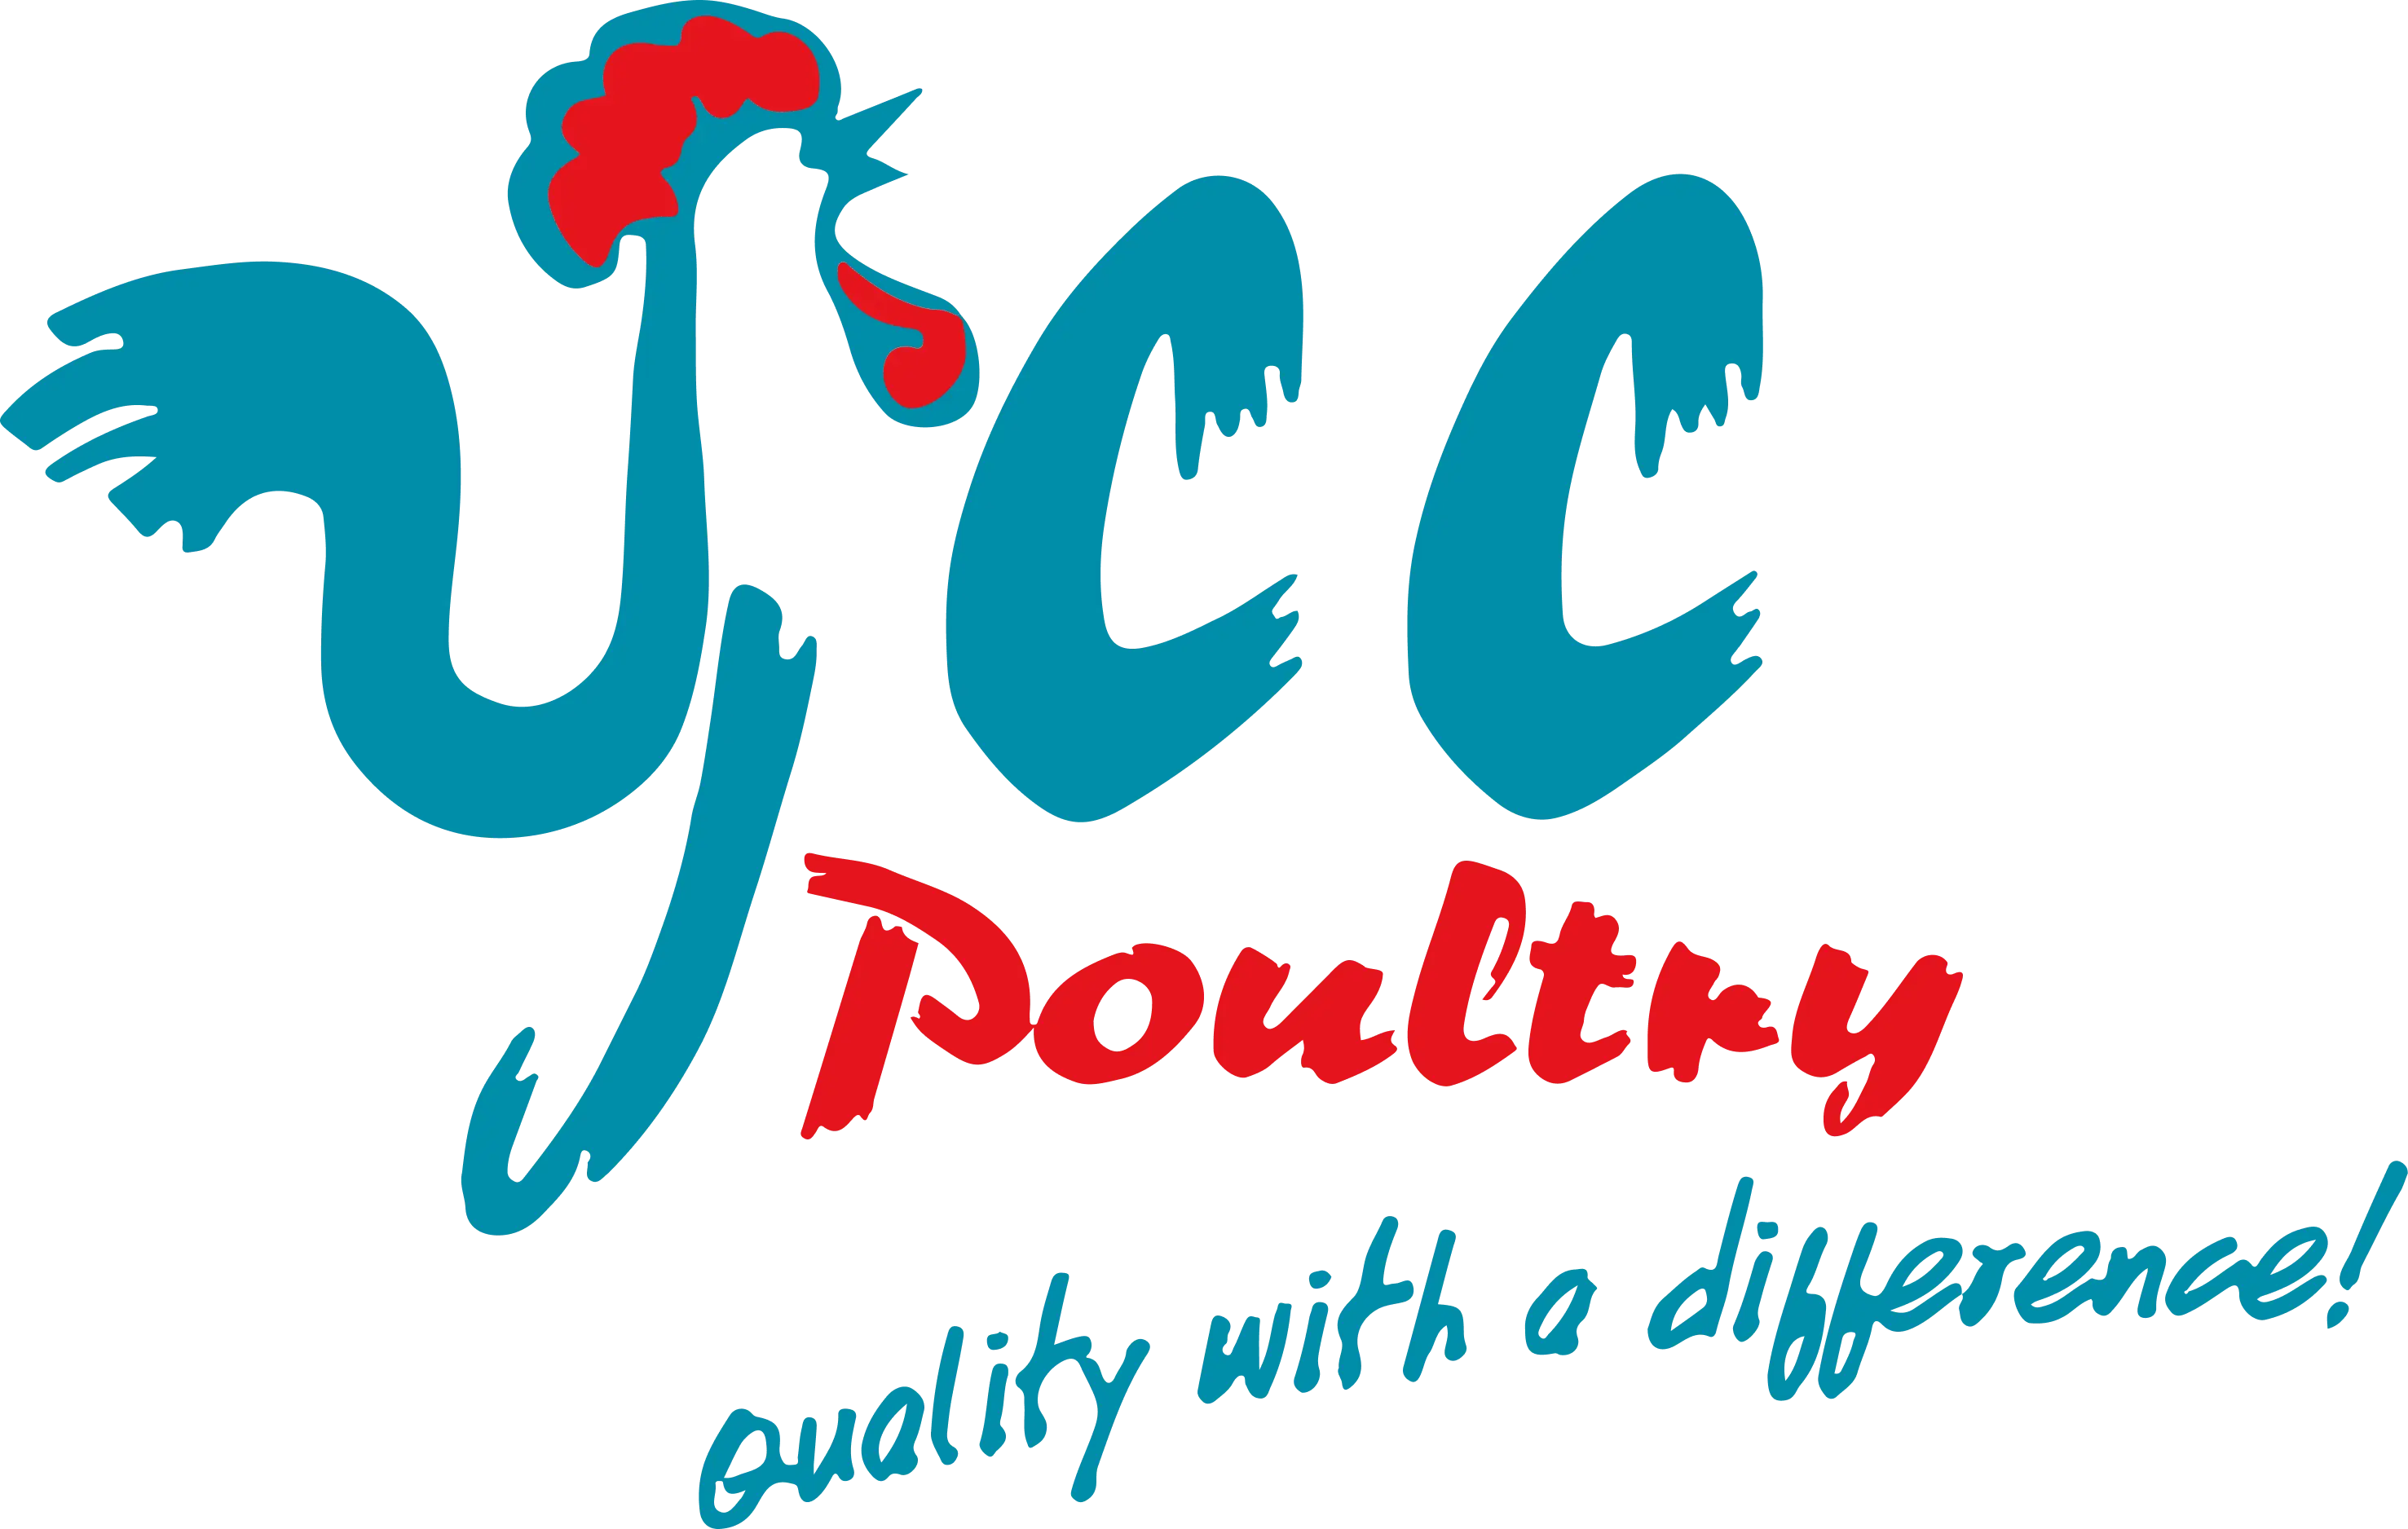 YCC Poultry